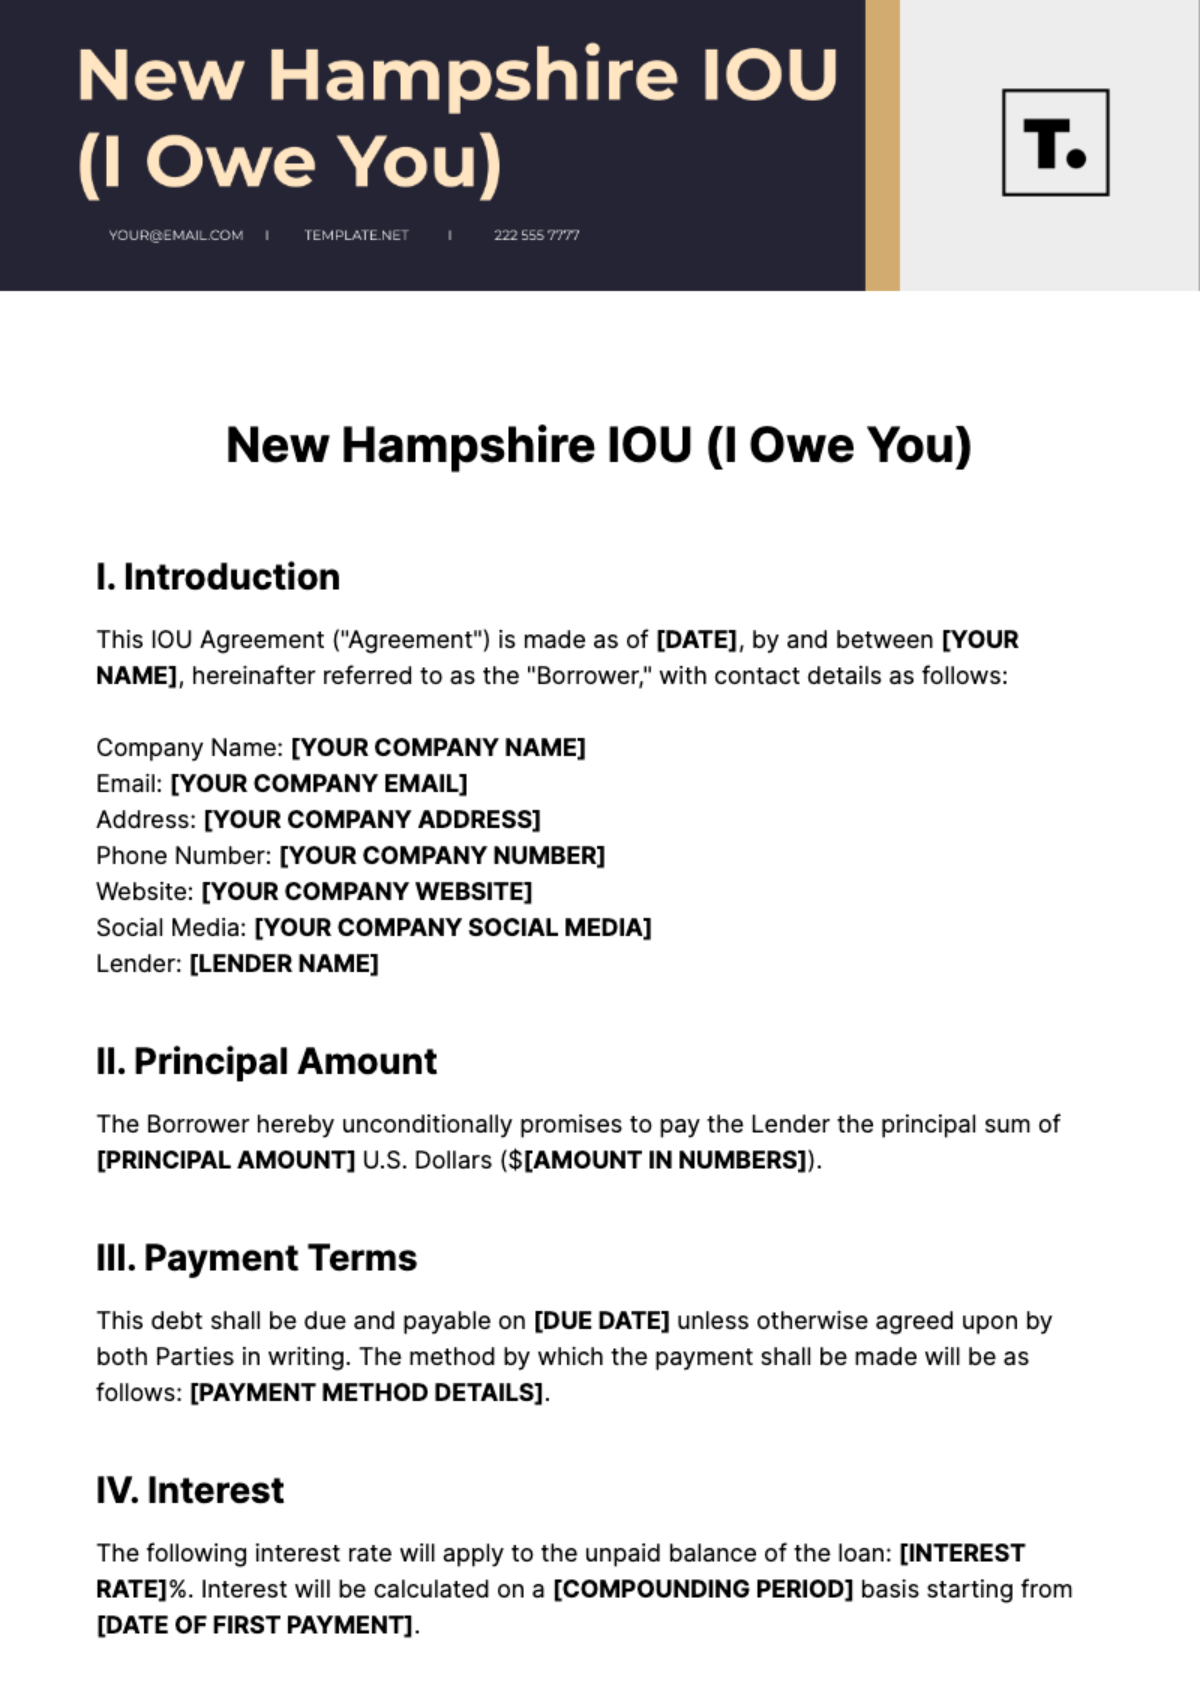 New Hampshire IOU Template